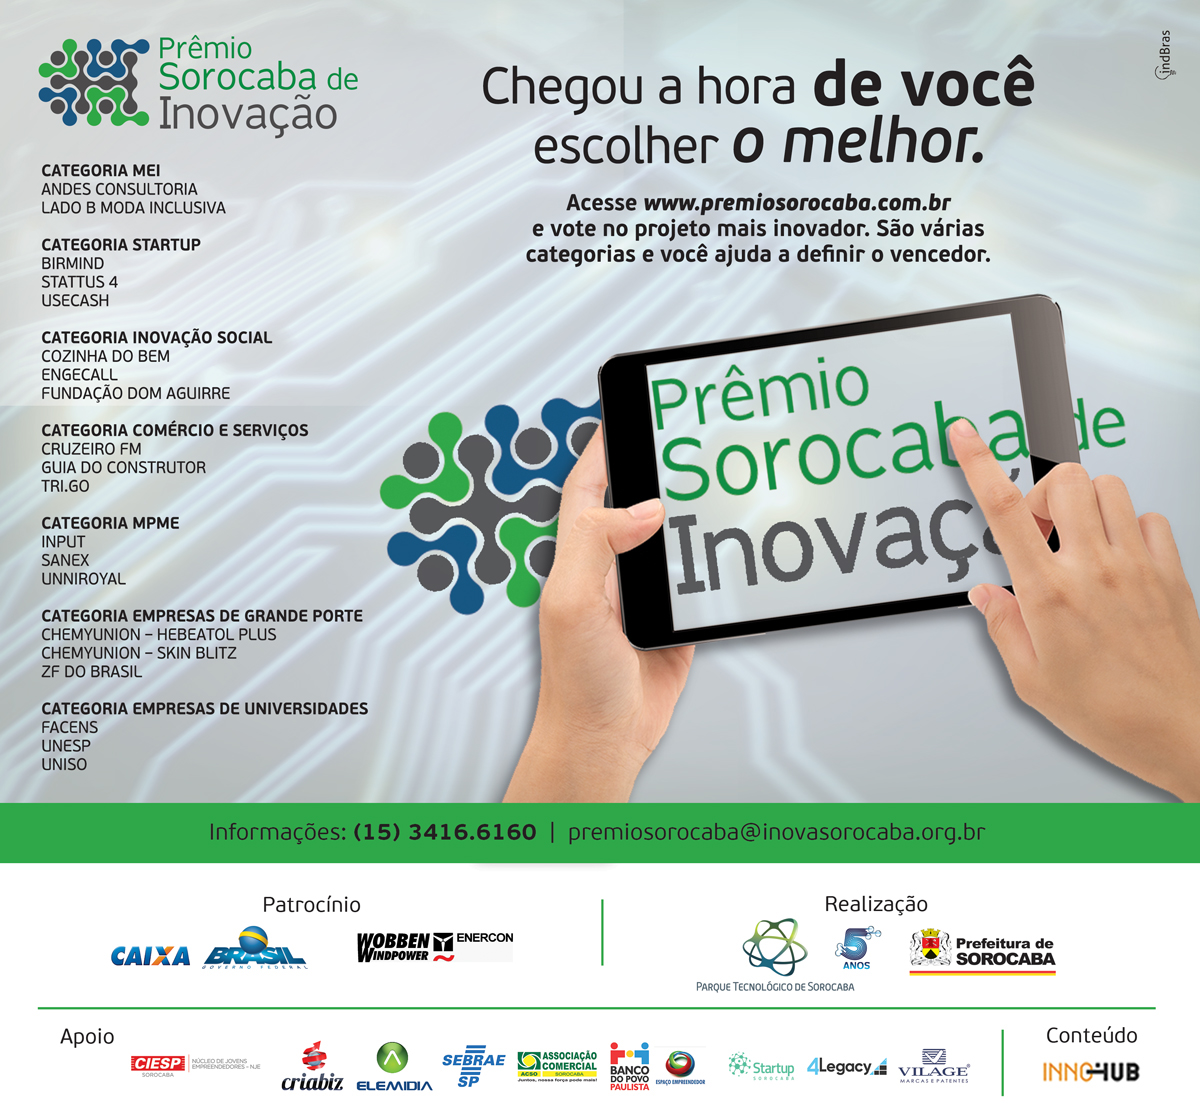 innovation inovação premio award Sorocaba park tech tecnologico technological